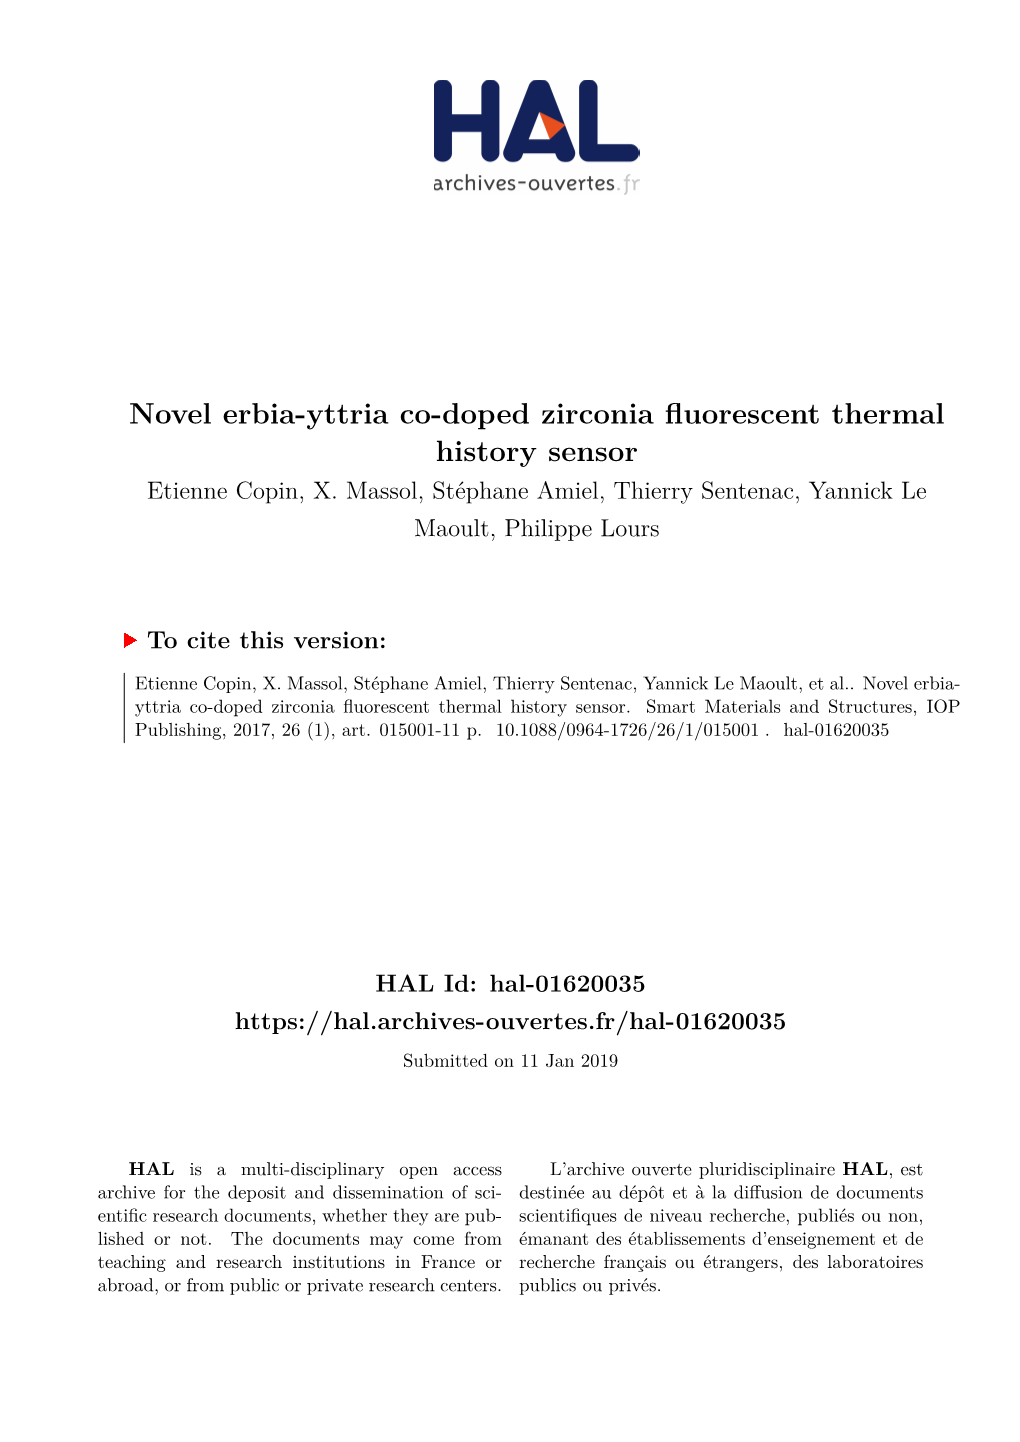 Novel Erbia-Yttria Co-Doped Zirconia Fluorescent Thermal History Sensor Etienne Copin, X